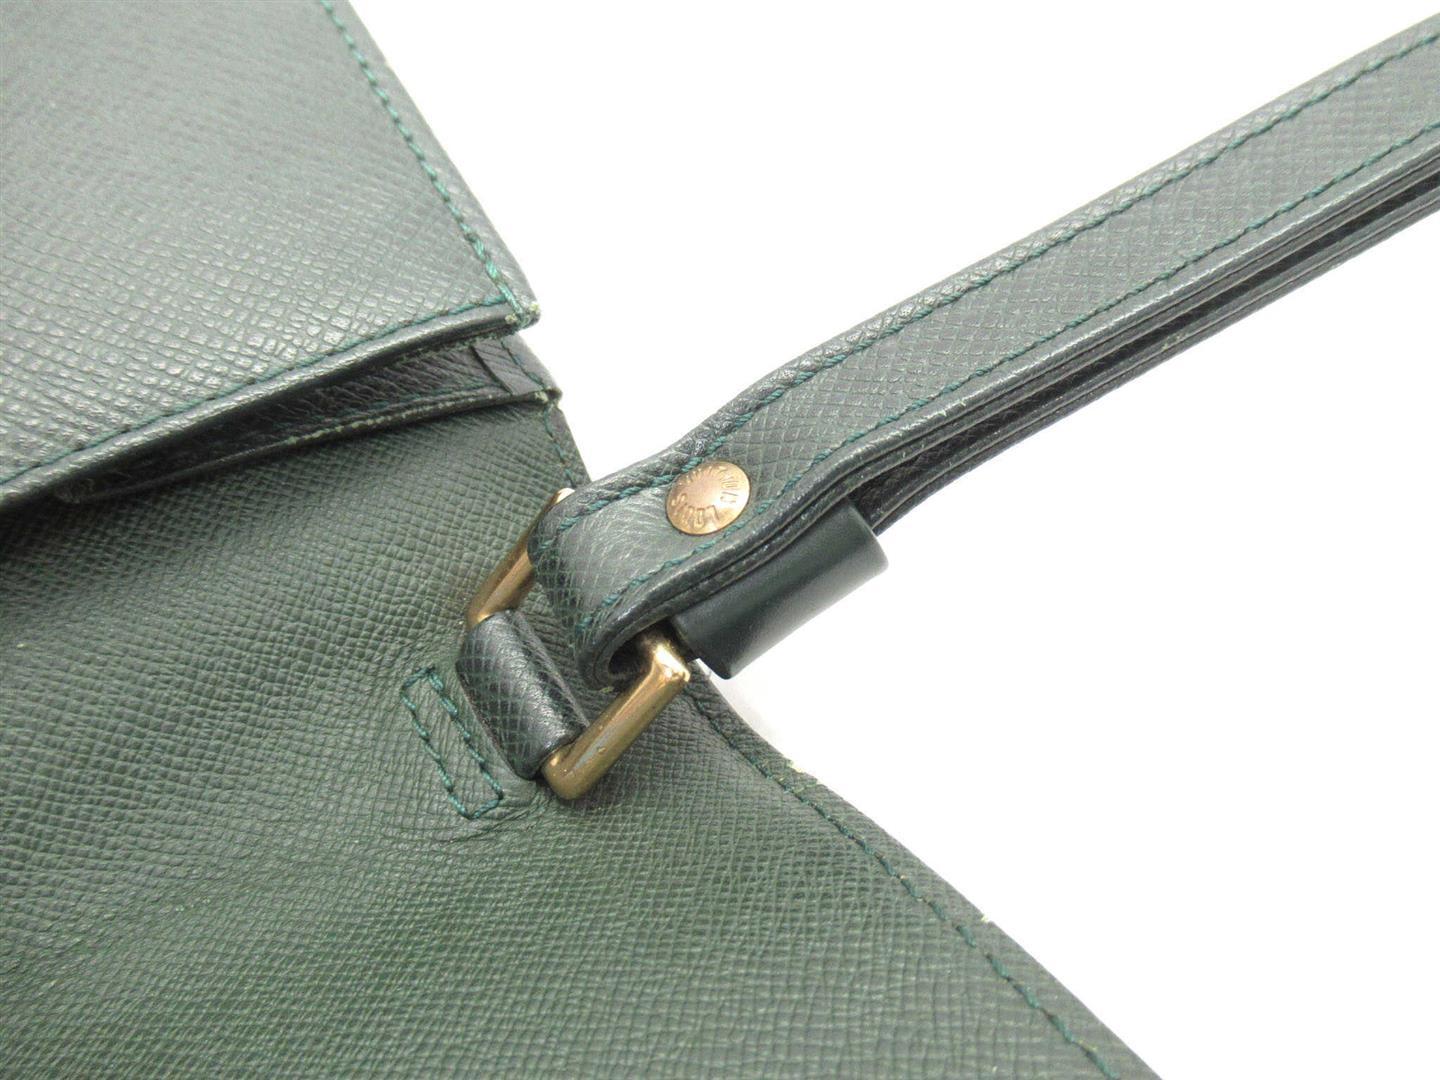 Louis Vuitton Green Epi Leather Clutch